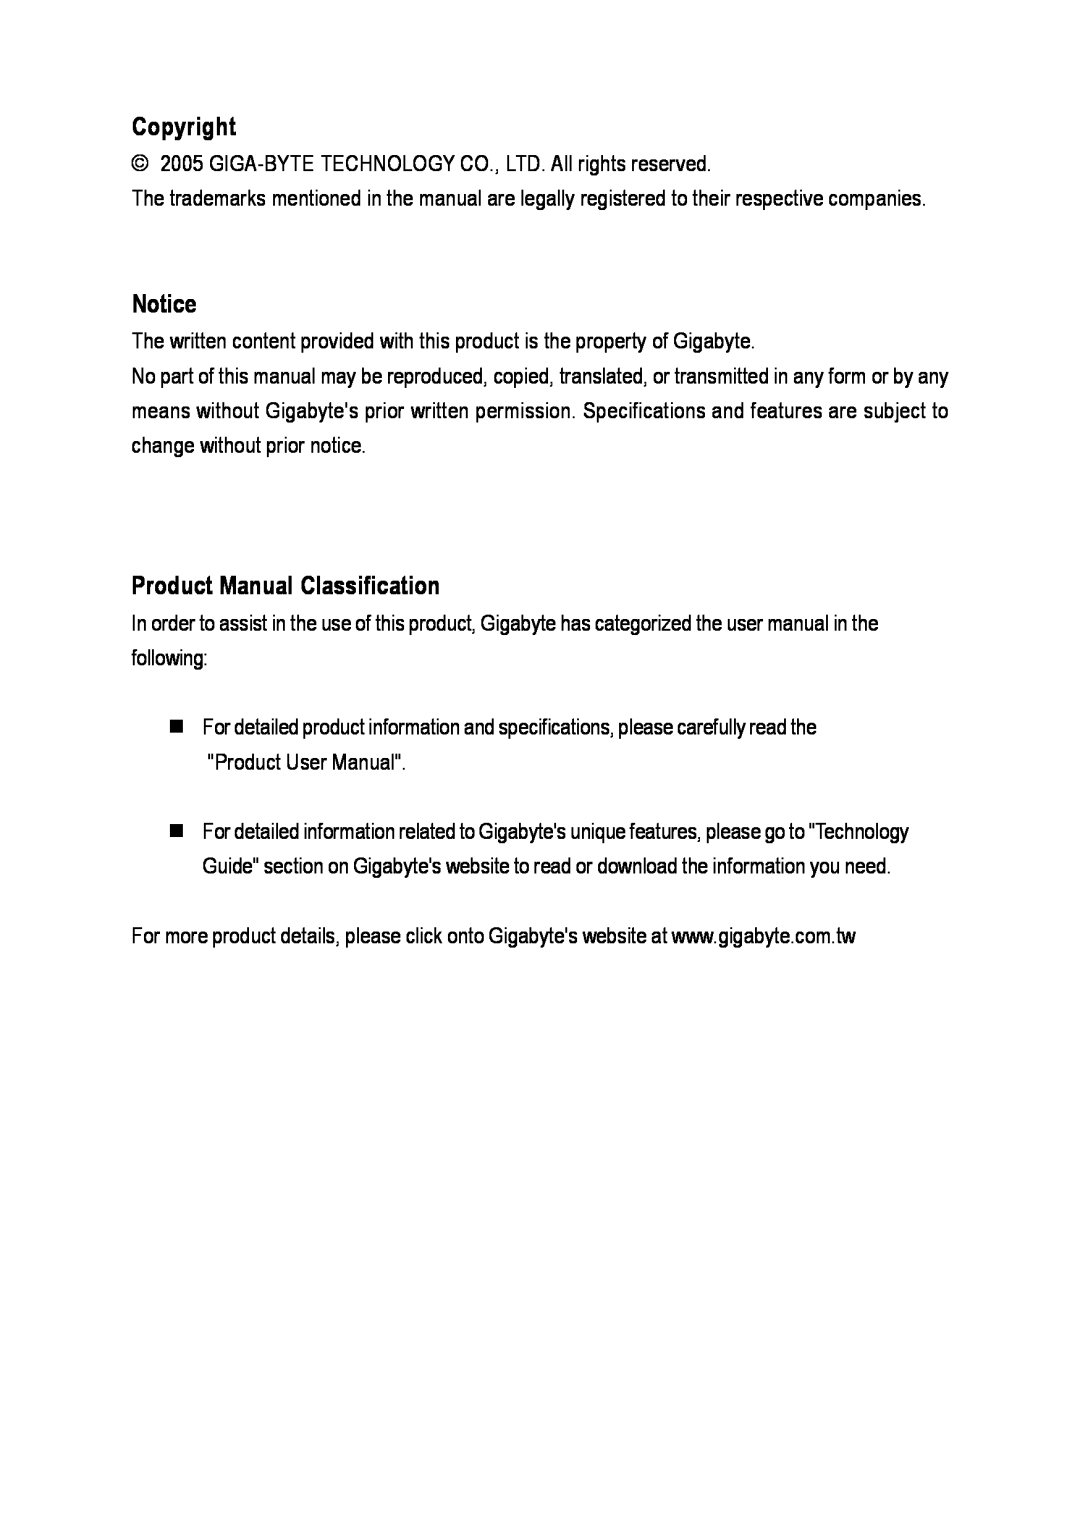 Gigabyte GA-8VM800M-775 user manual Copyright, Product Manual Classification 